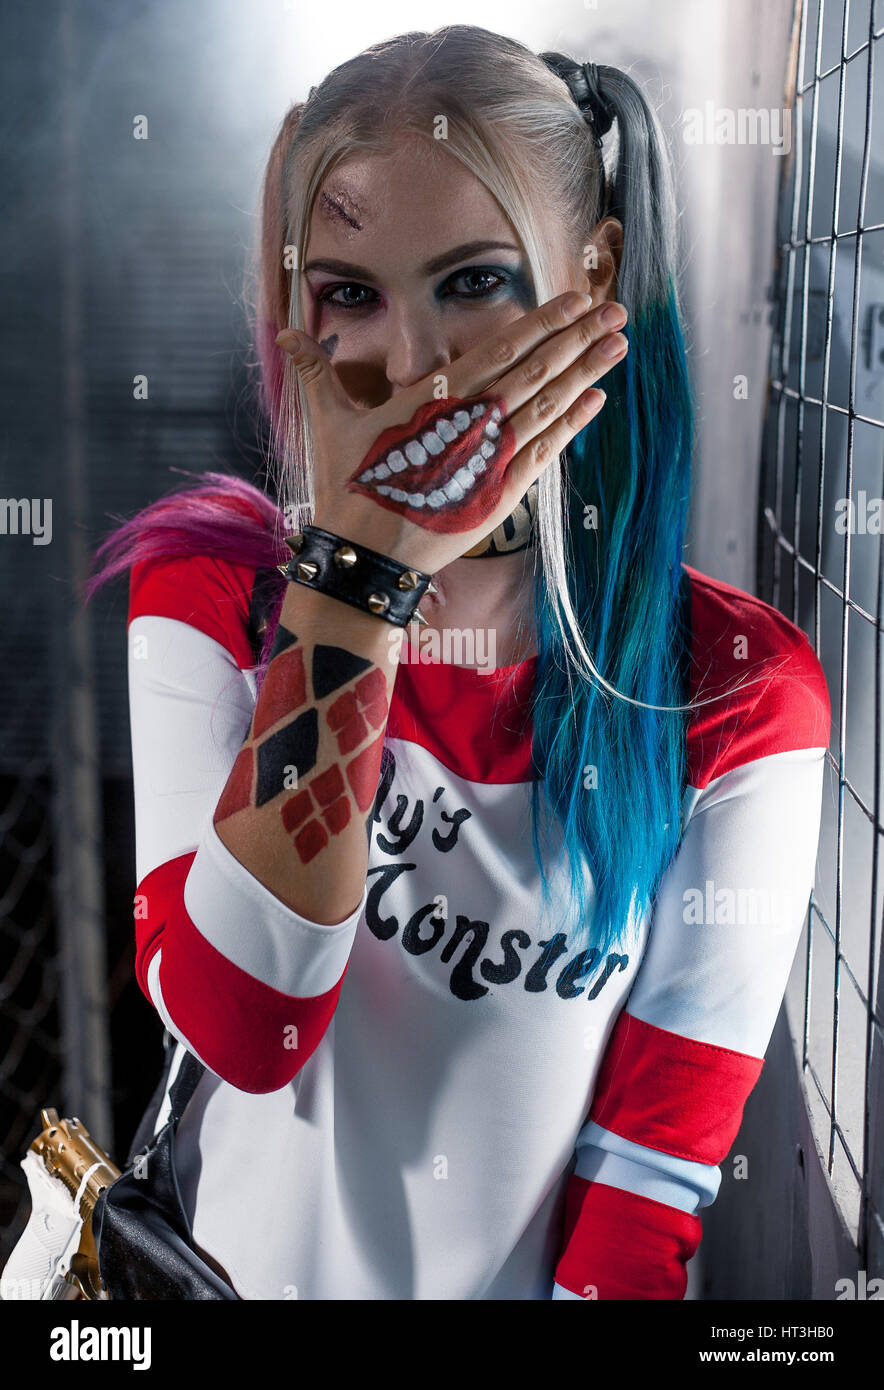 Portrait of smiling girl in costume Harley Quinn. She is near grid ...